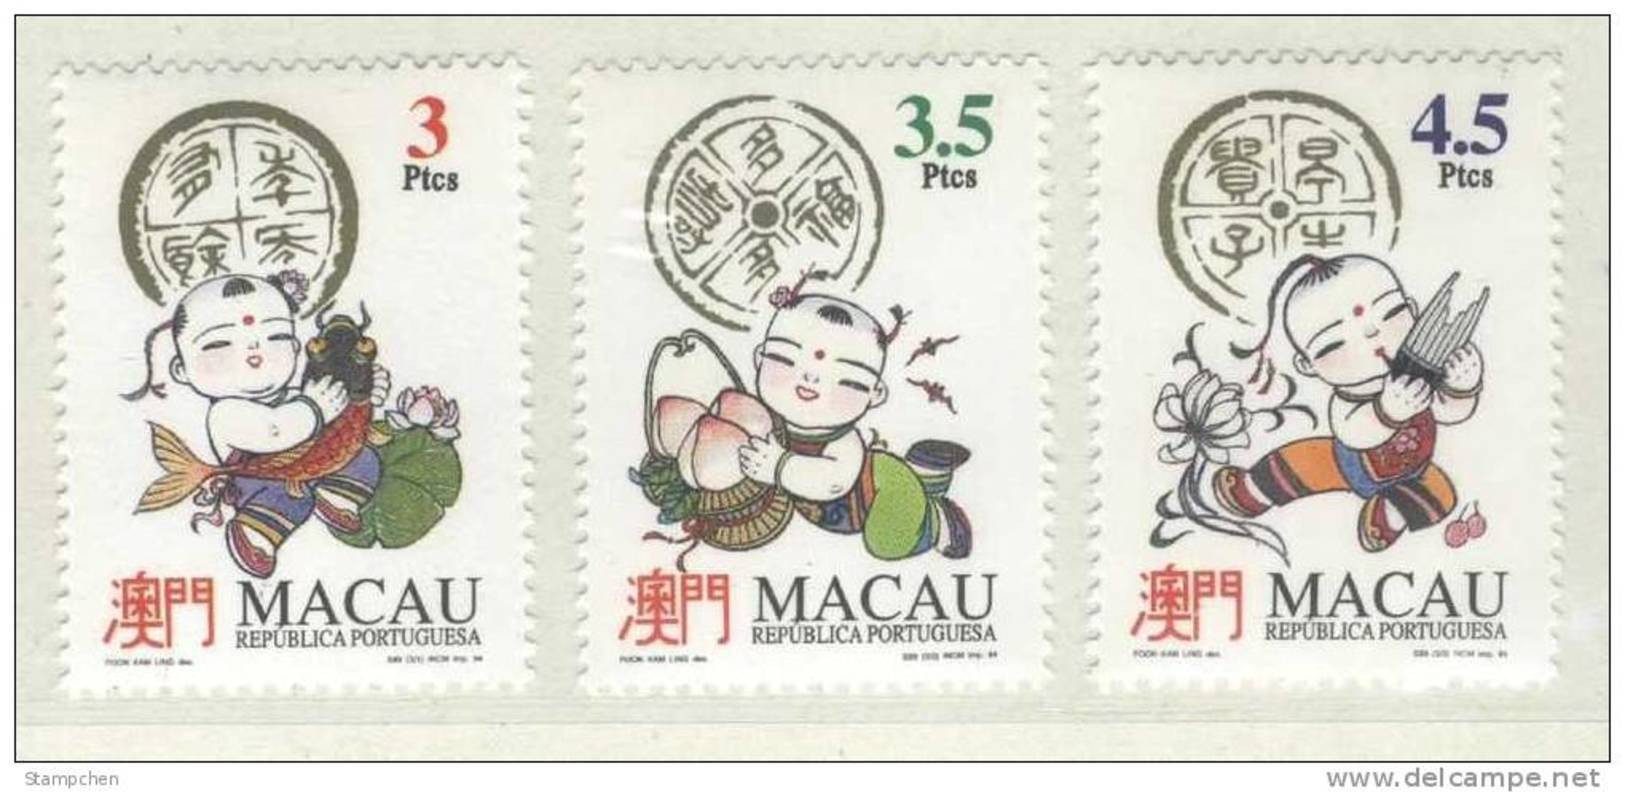 1994 Macau/Macao Stamps -Fortune Symbols Culture Costume Auspicious Bat Fish Lotus Peach Fruit - Chauve-souris